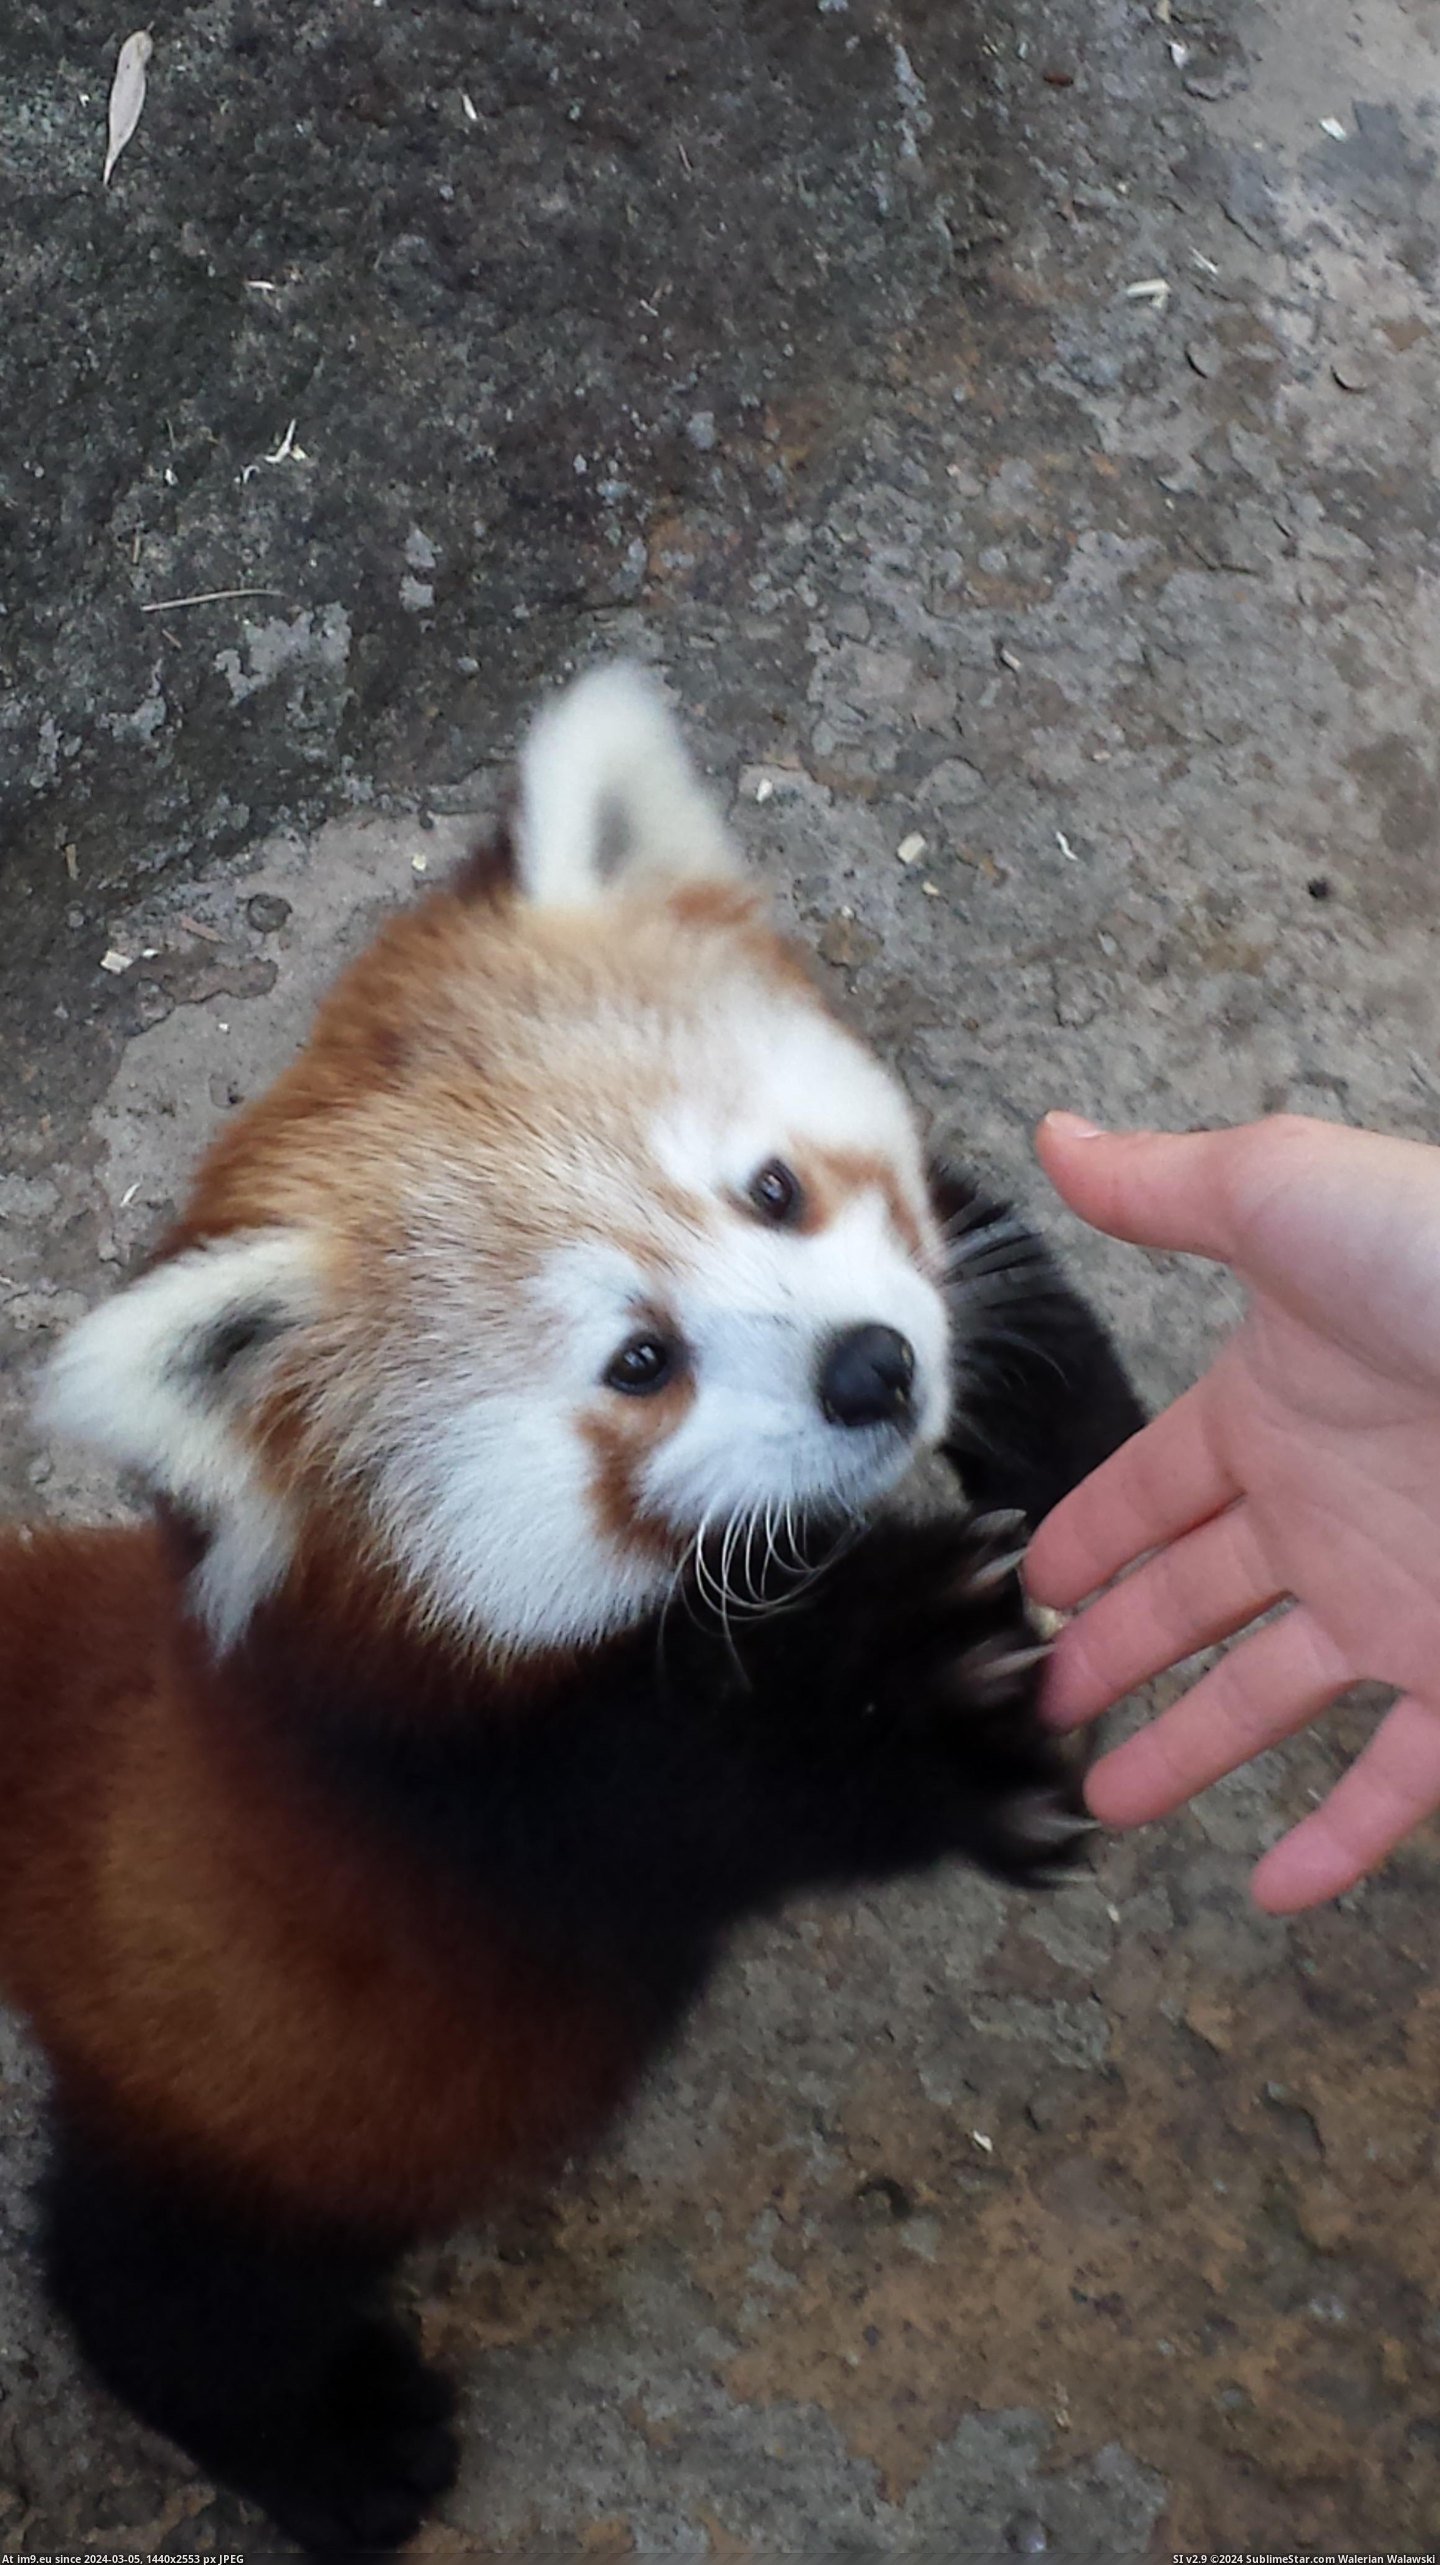 #Red #Girlfriend #Zoo #Panda #Shake #Got #Hands [Aww] My girlfriend got to shake hands with a red panda at the zoo! Pic. (Bild von album My r/AWW favs))